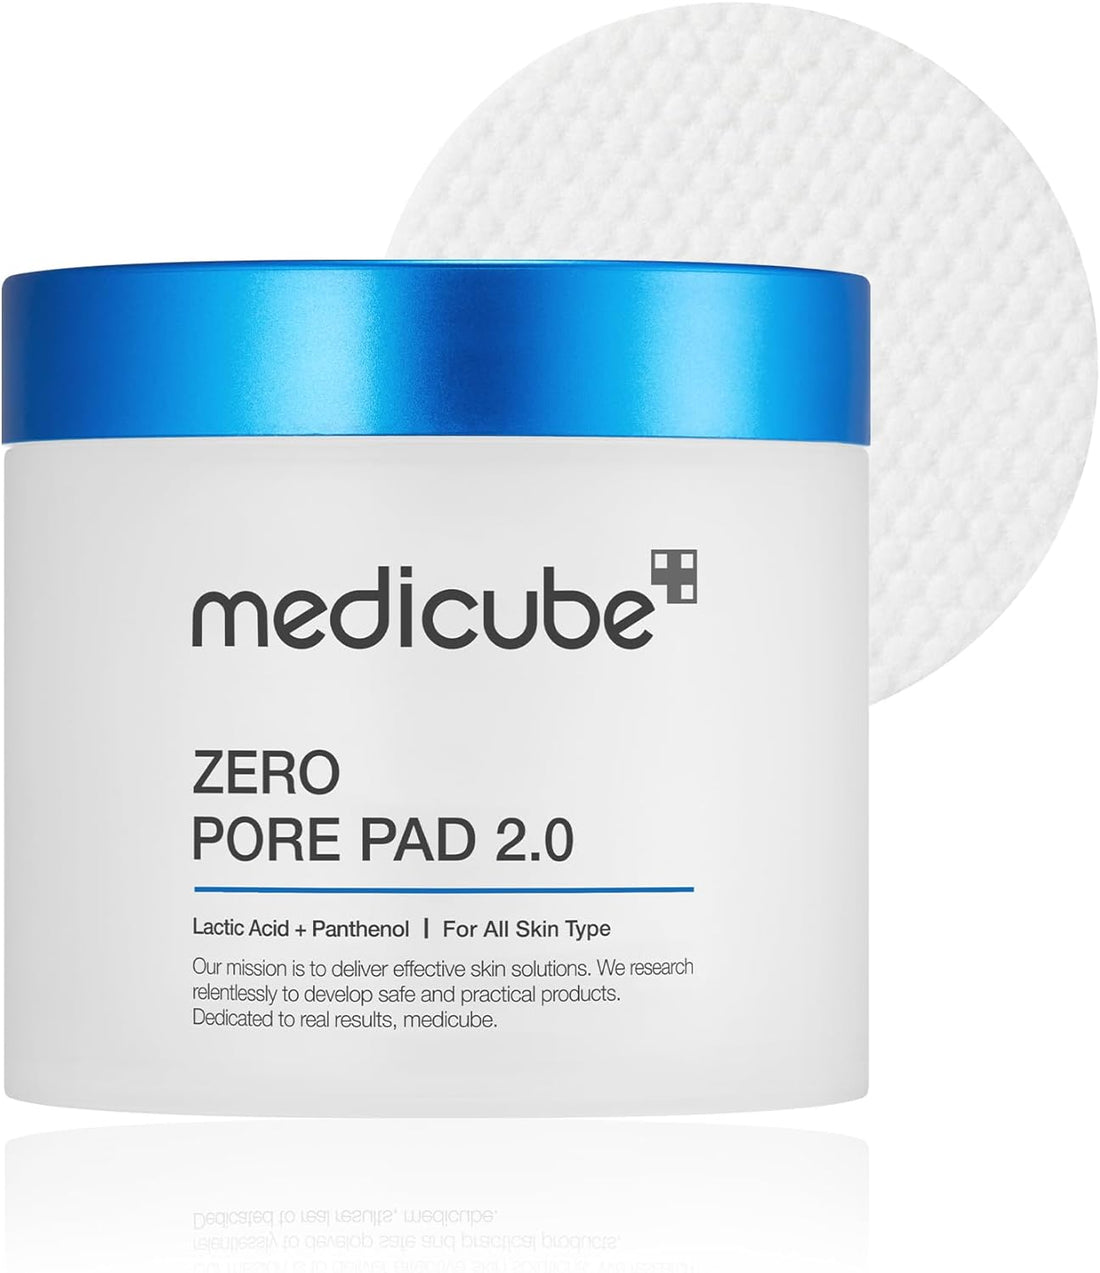 Medicube Zero Pore Pads 2.0